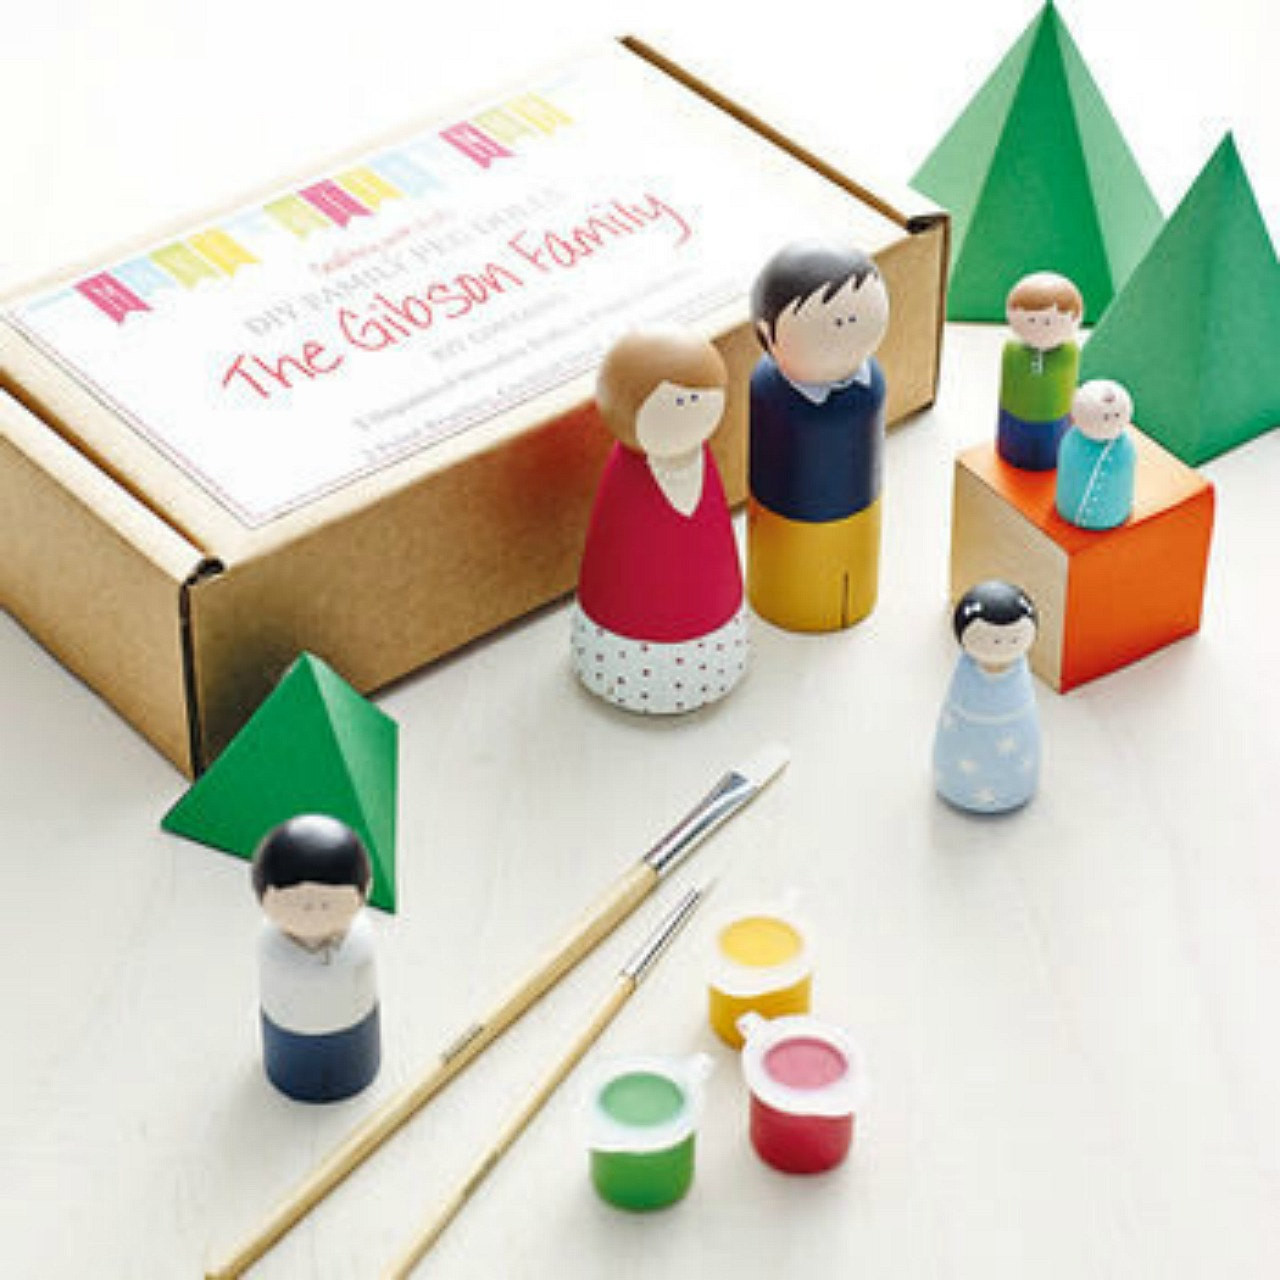 Wood Craft Kits For Kids
 Peg Doll Kit Family of 4 Wooden Dolls Kids Craft Kit DIY